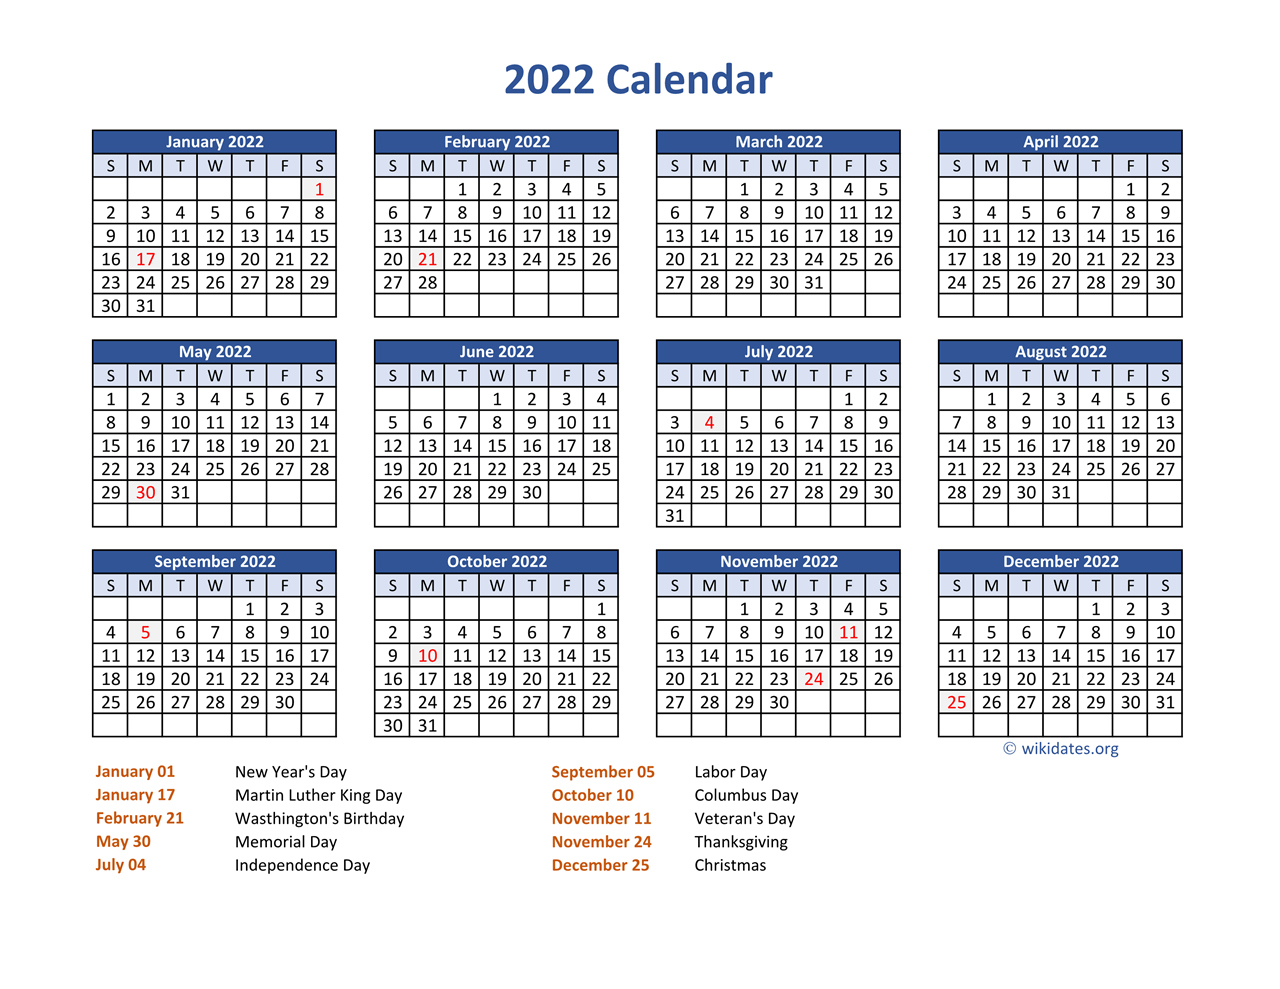 Pdf Calendar 2022 With Federal Holidays | Wikidates